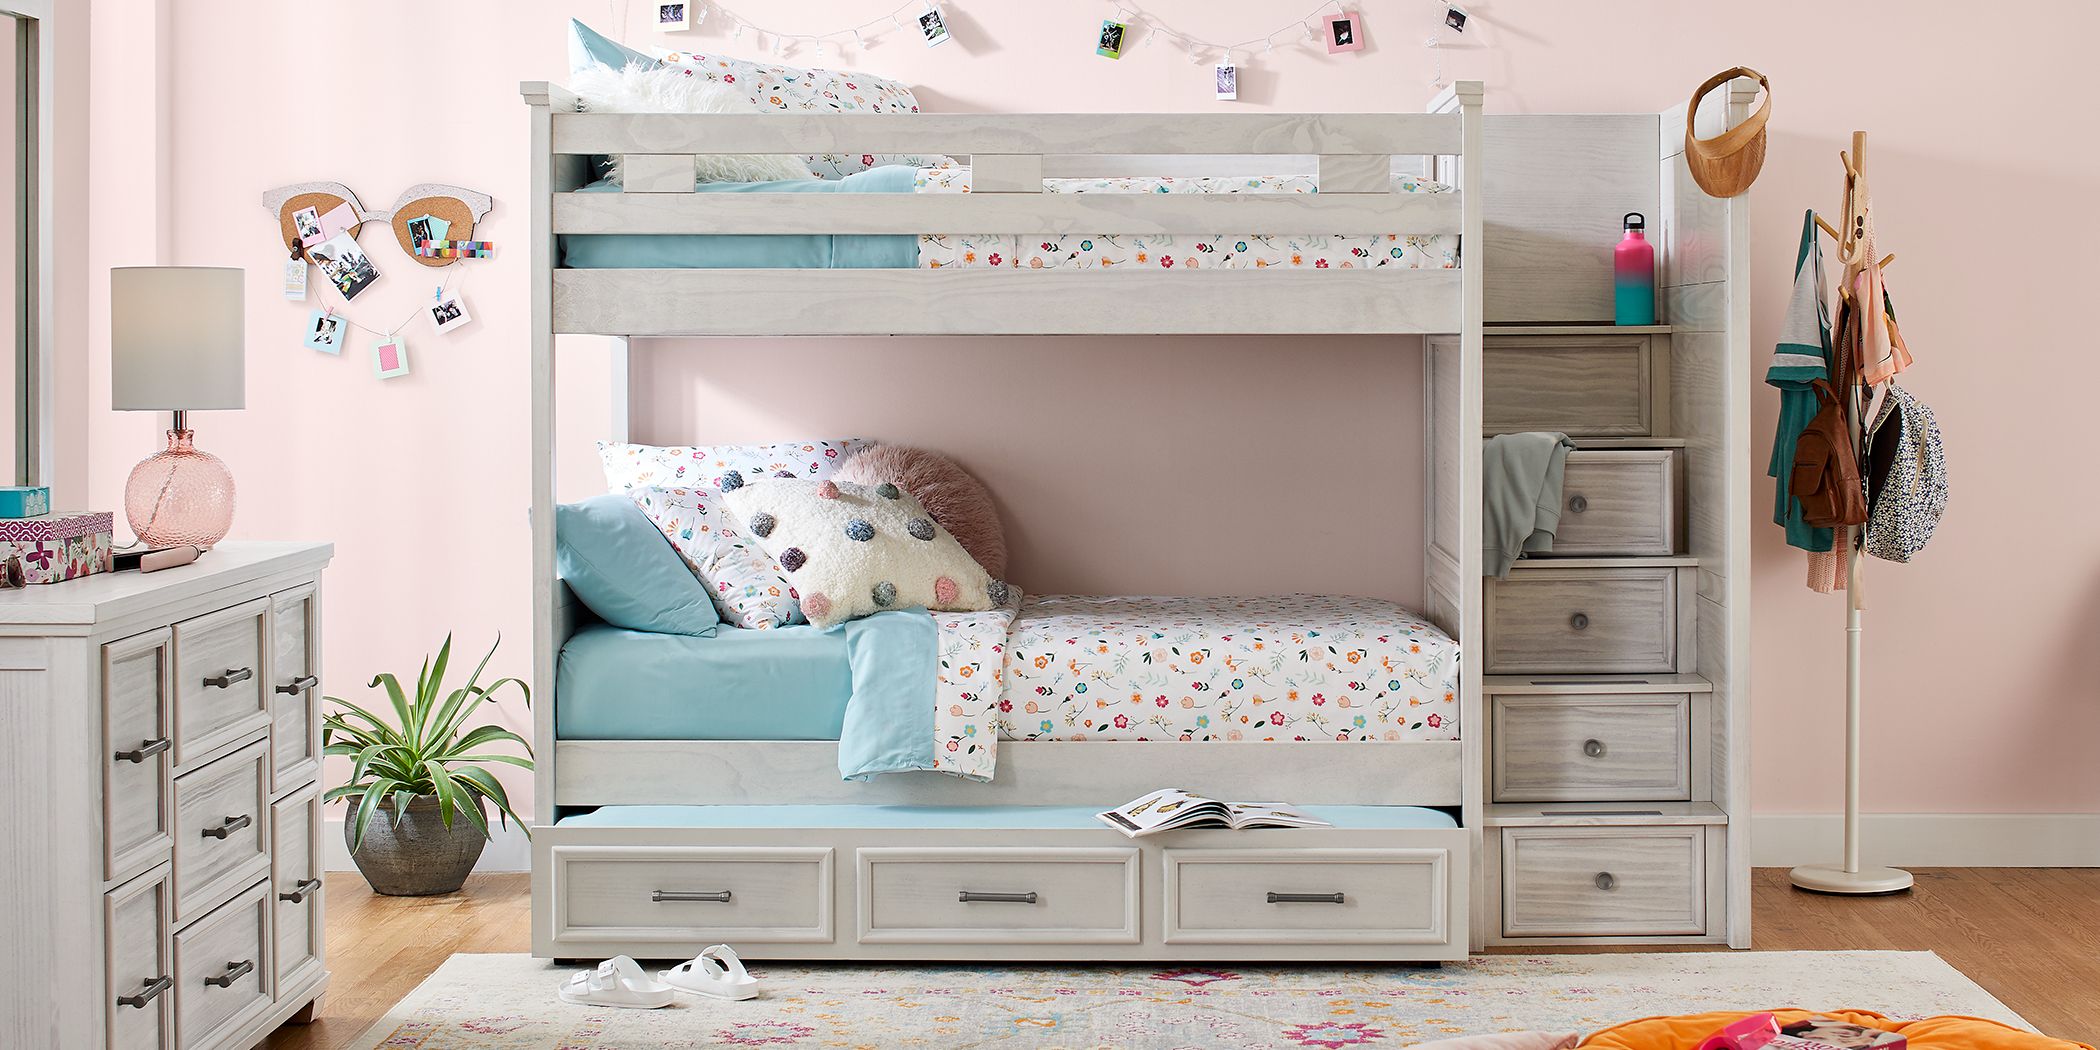 Bunk Beds With Storage Space, Kids Bunk Bed Bedroom Sets